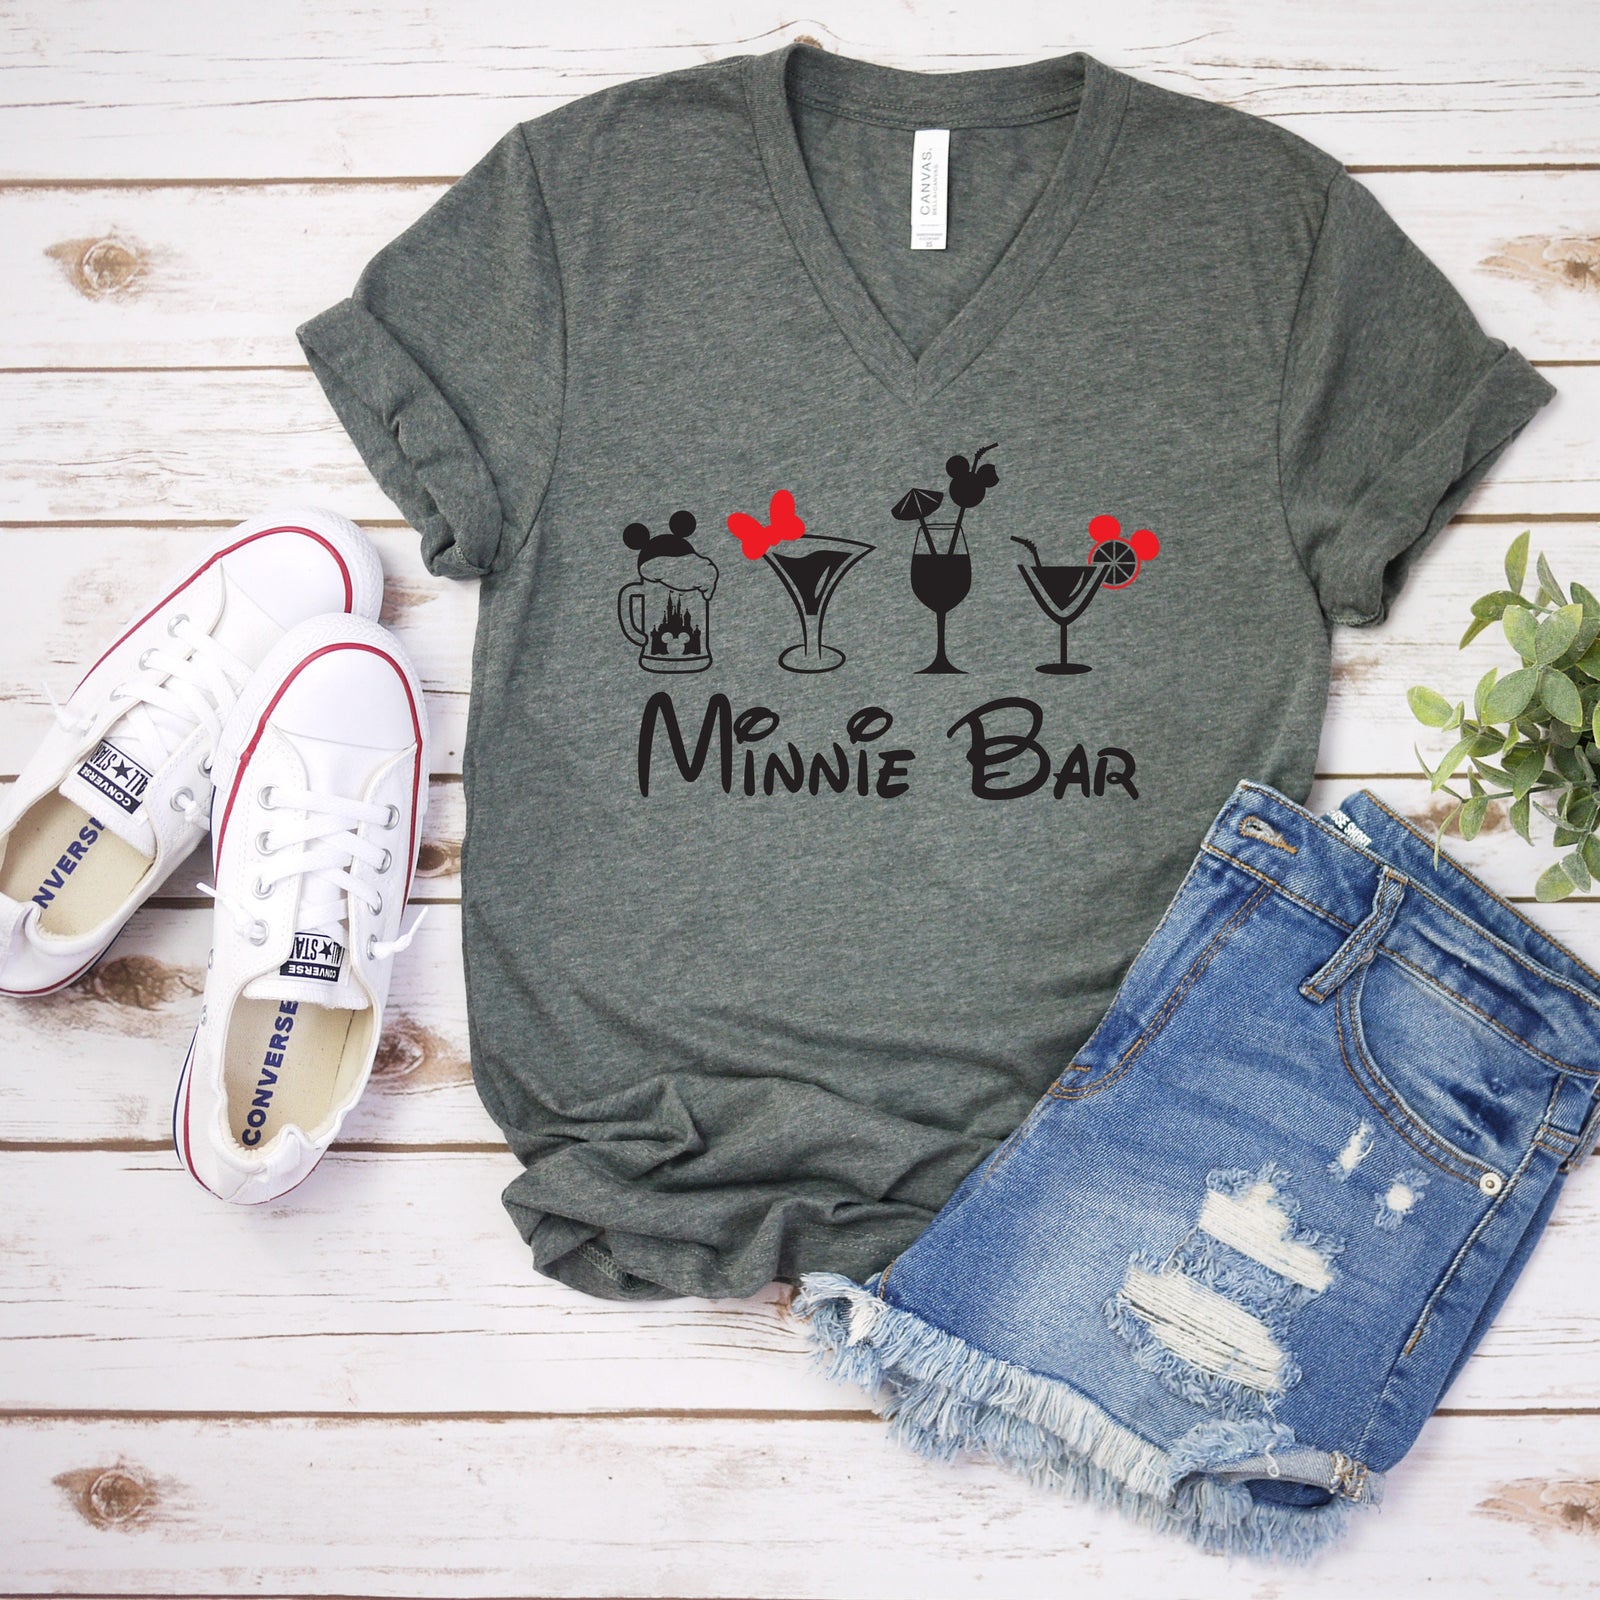 Minnie Bar t shirt - Drinking Shirt - Martini Drink Wine Glass - Disney - Epcot Food and Wine